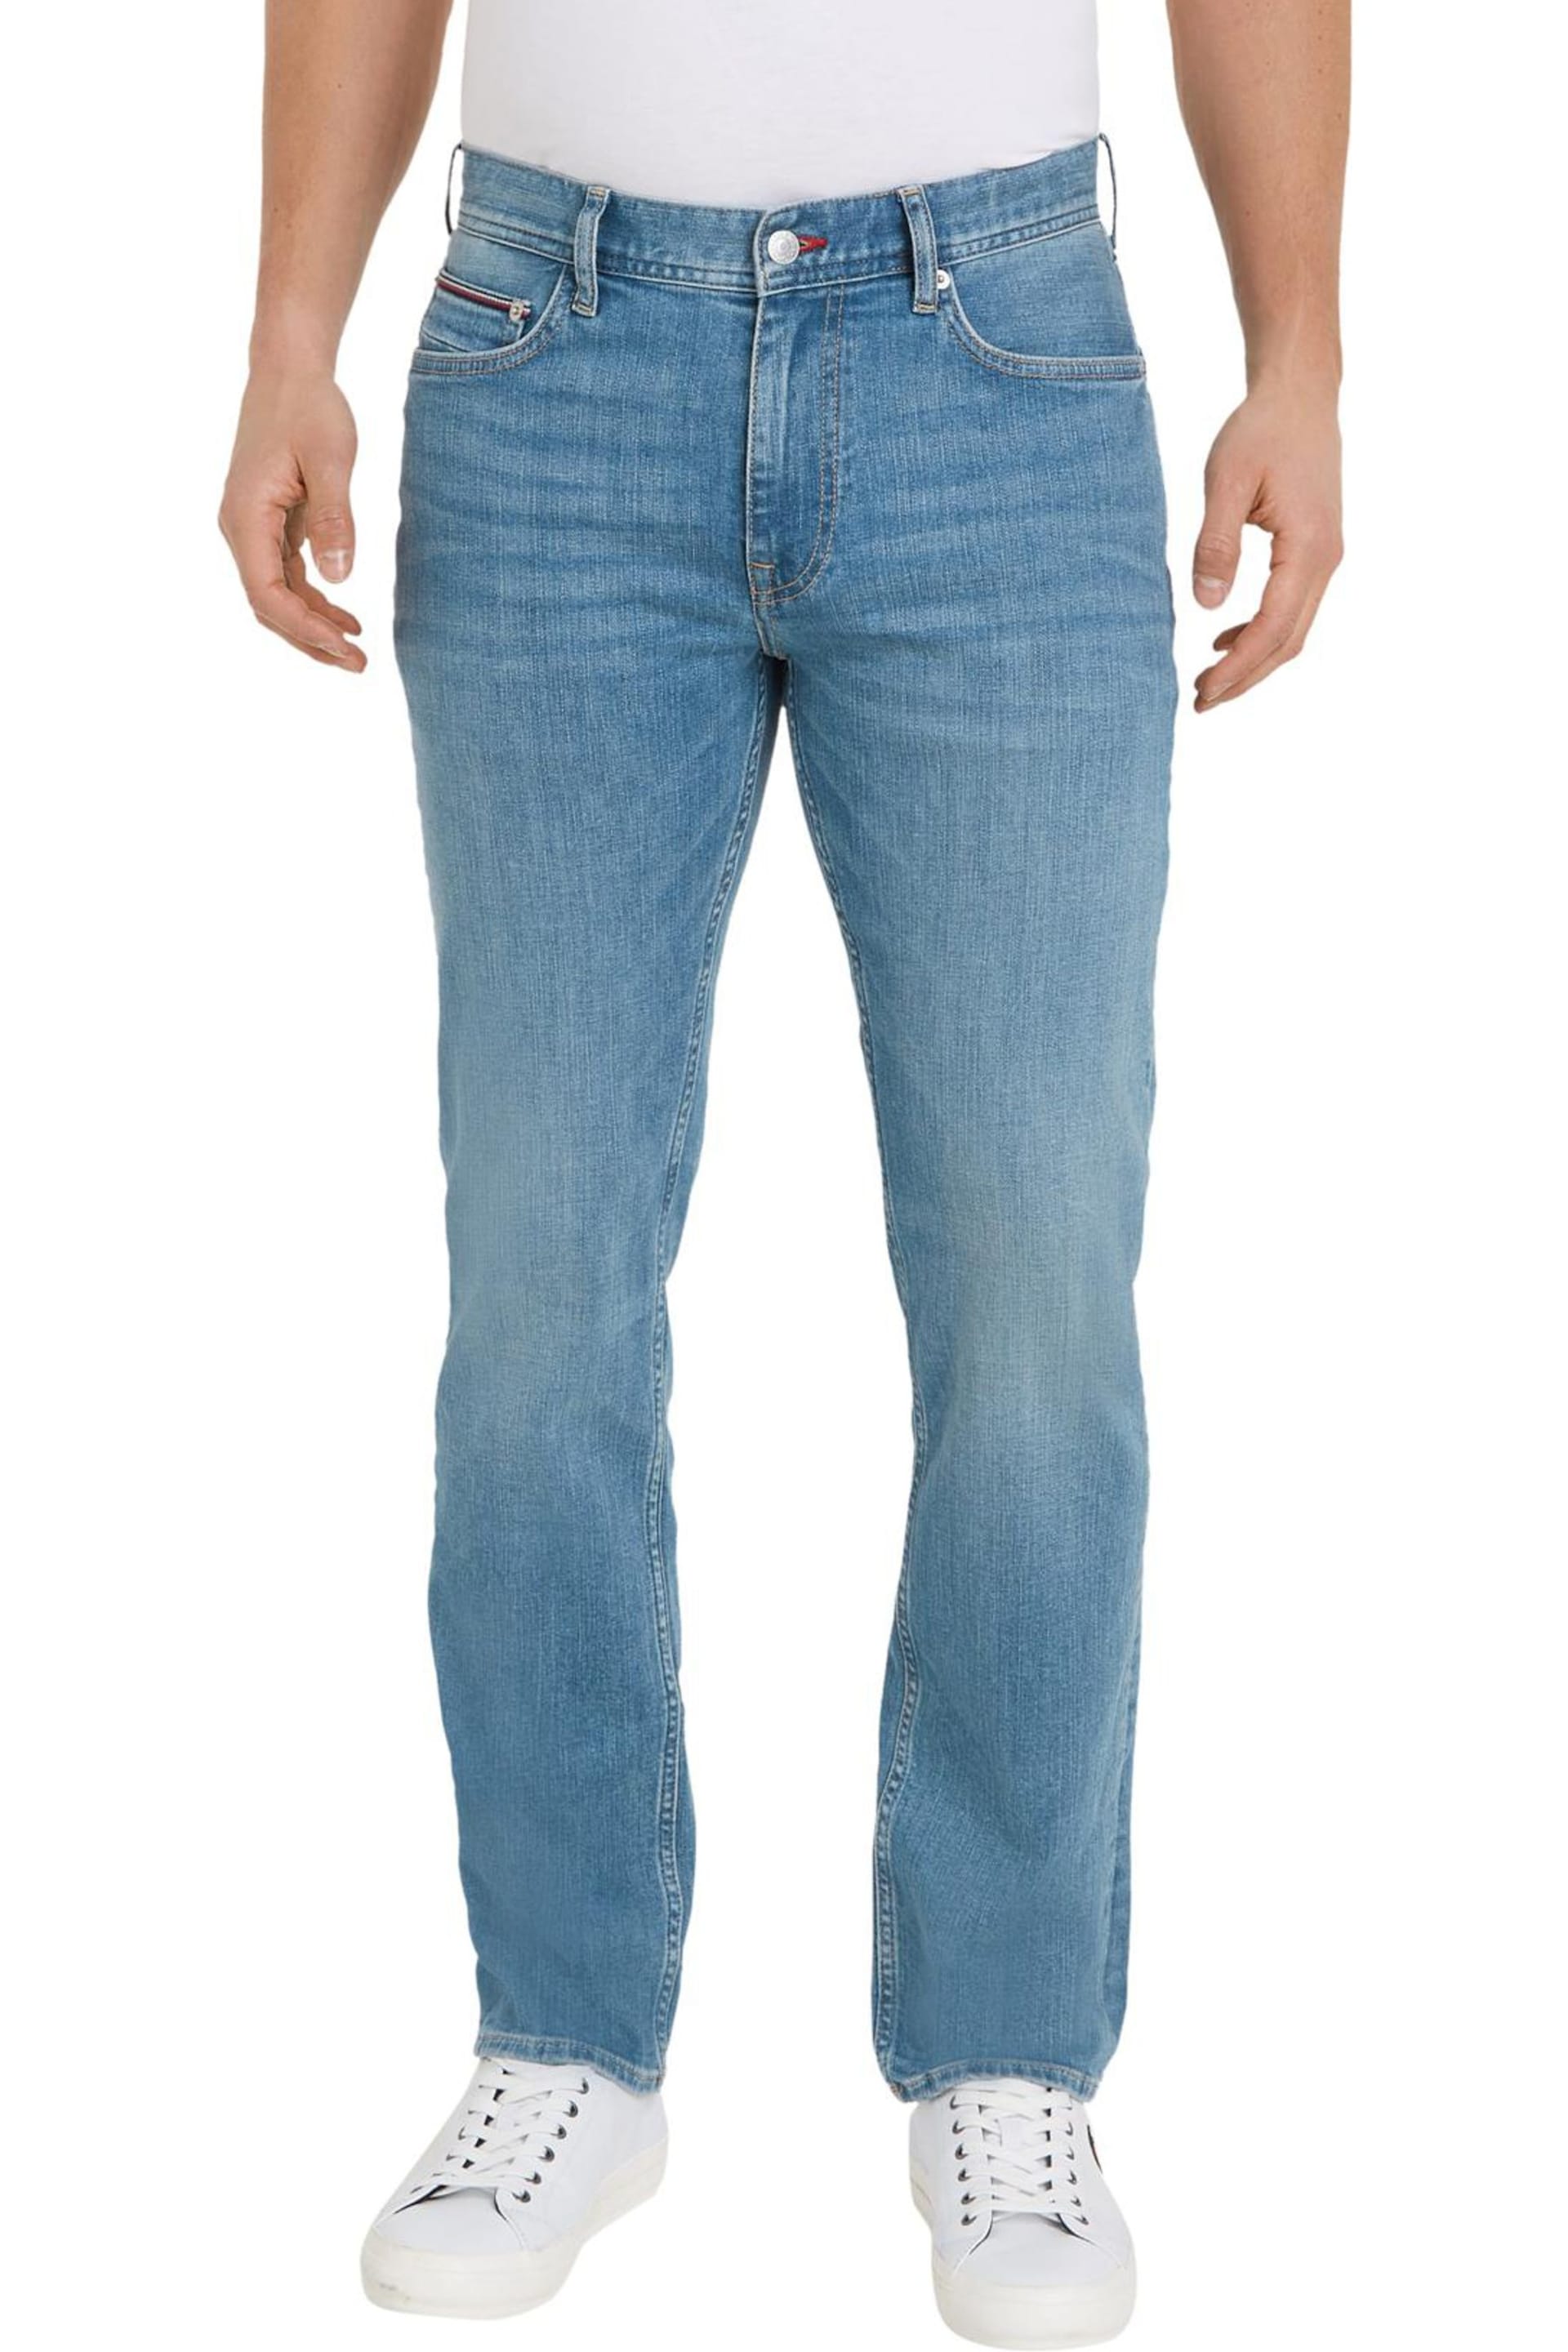 Tommy Hilfiger Blue Madison Jeans - Image 1 of 4